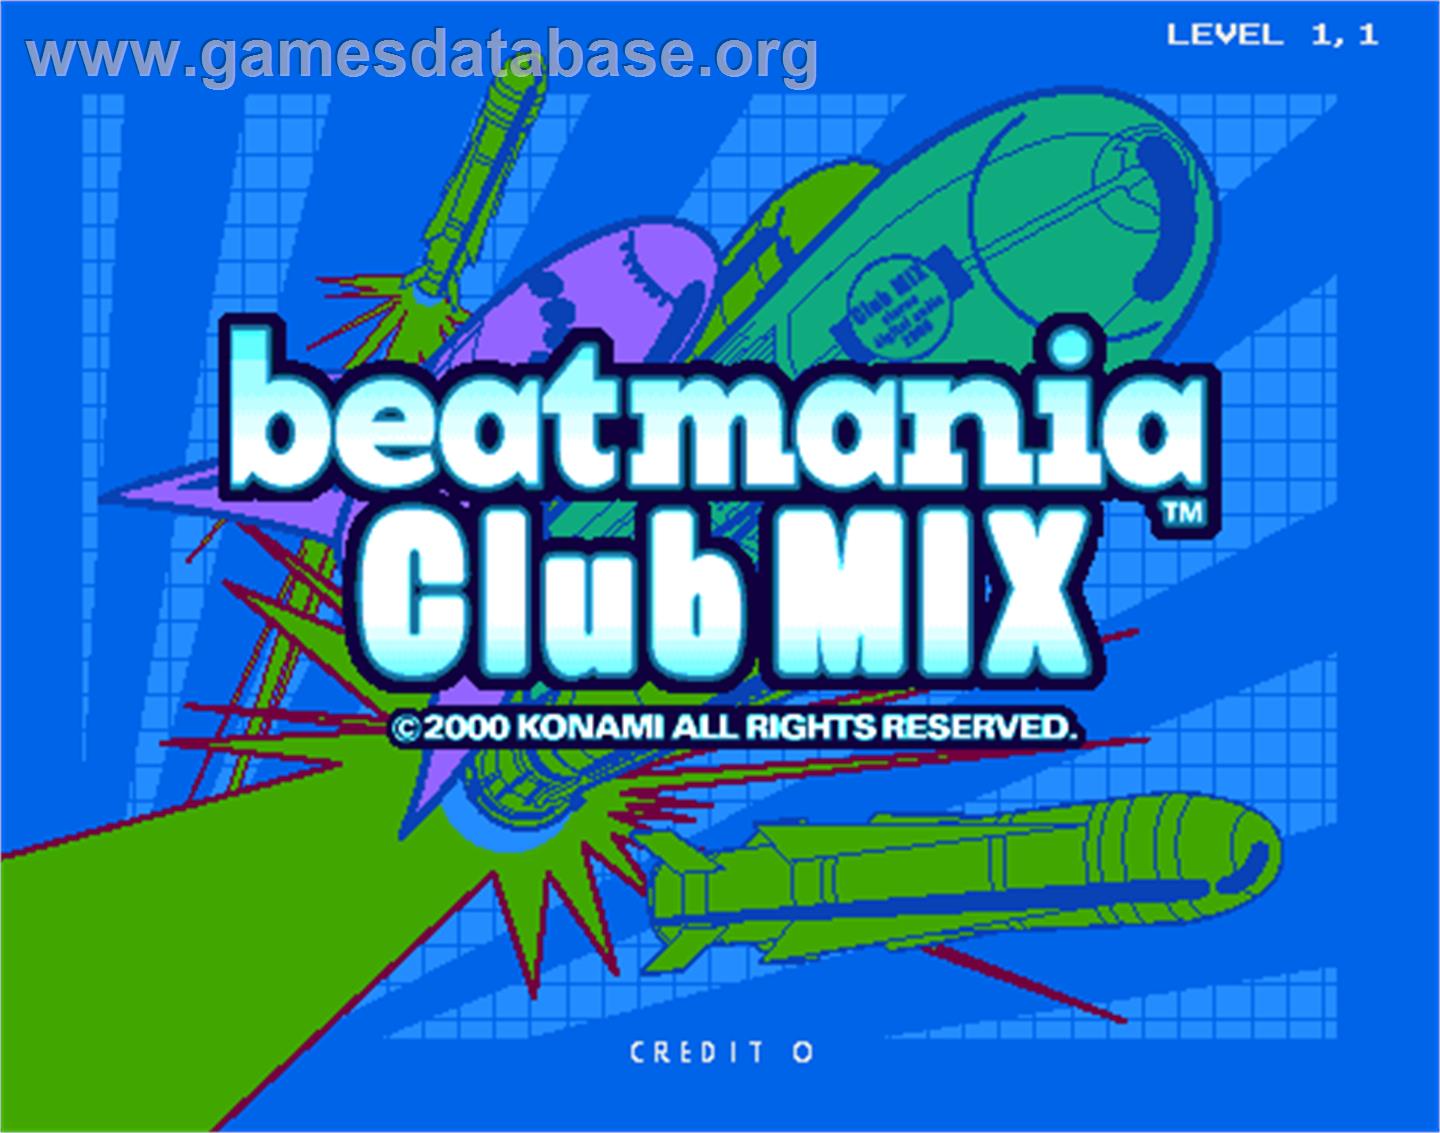 beatmania Club MIX - Arcade - Artwork - Title Screen